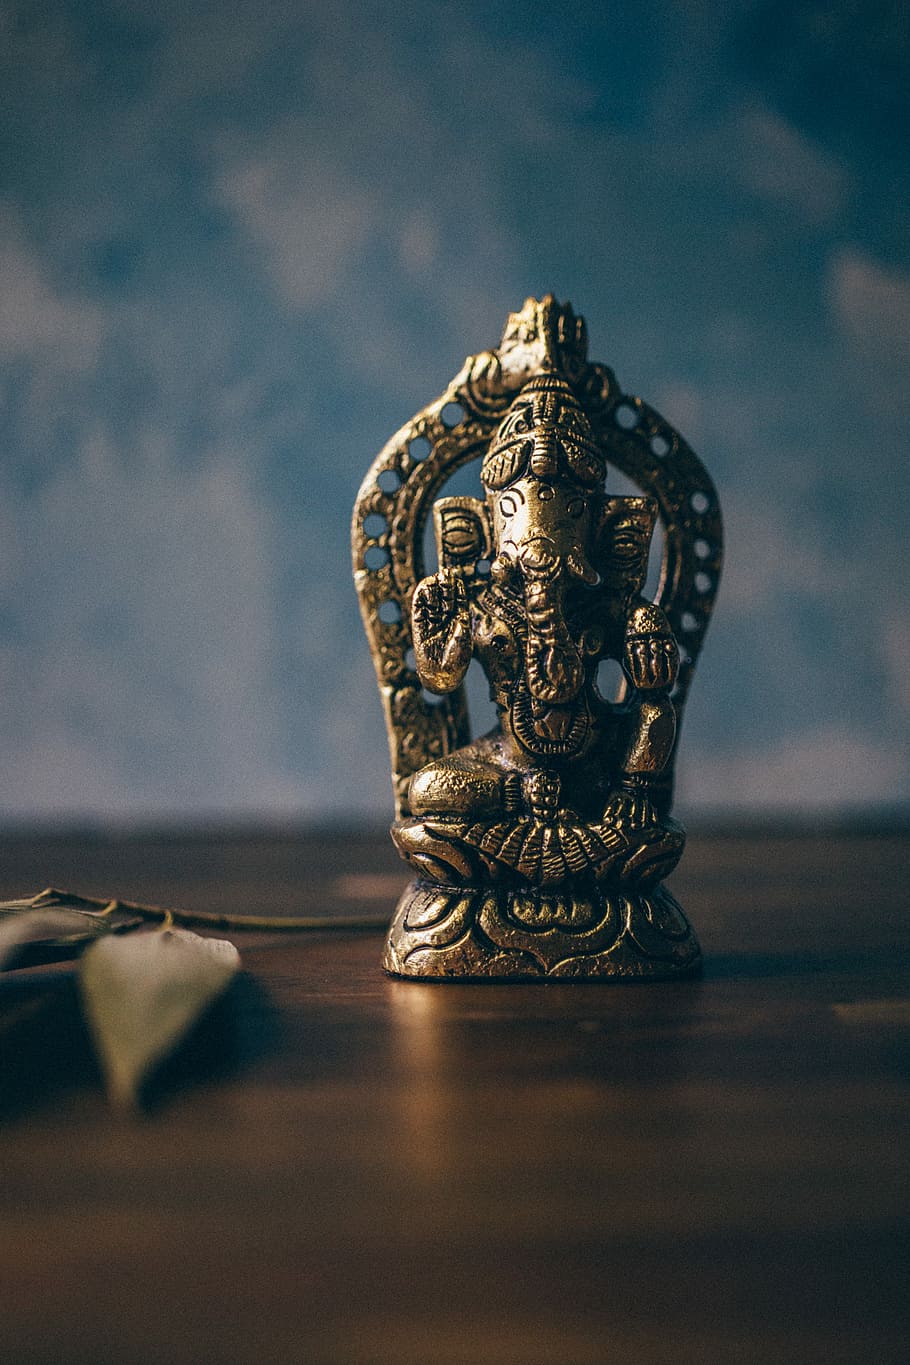 HD wallpaper: Ganesha figurine on brown surface, shallow focus ...